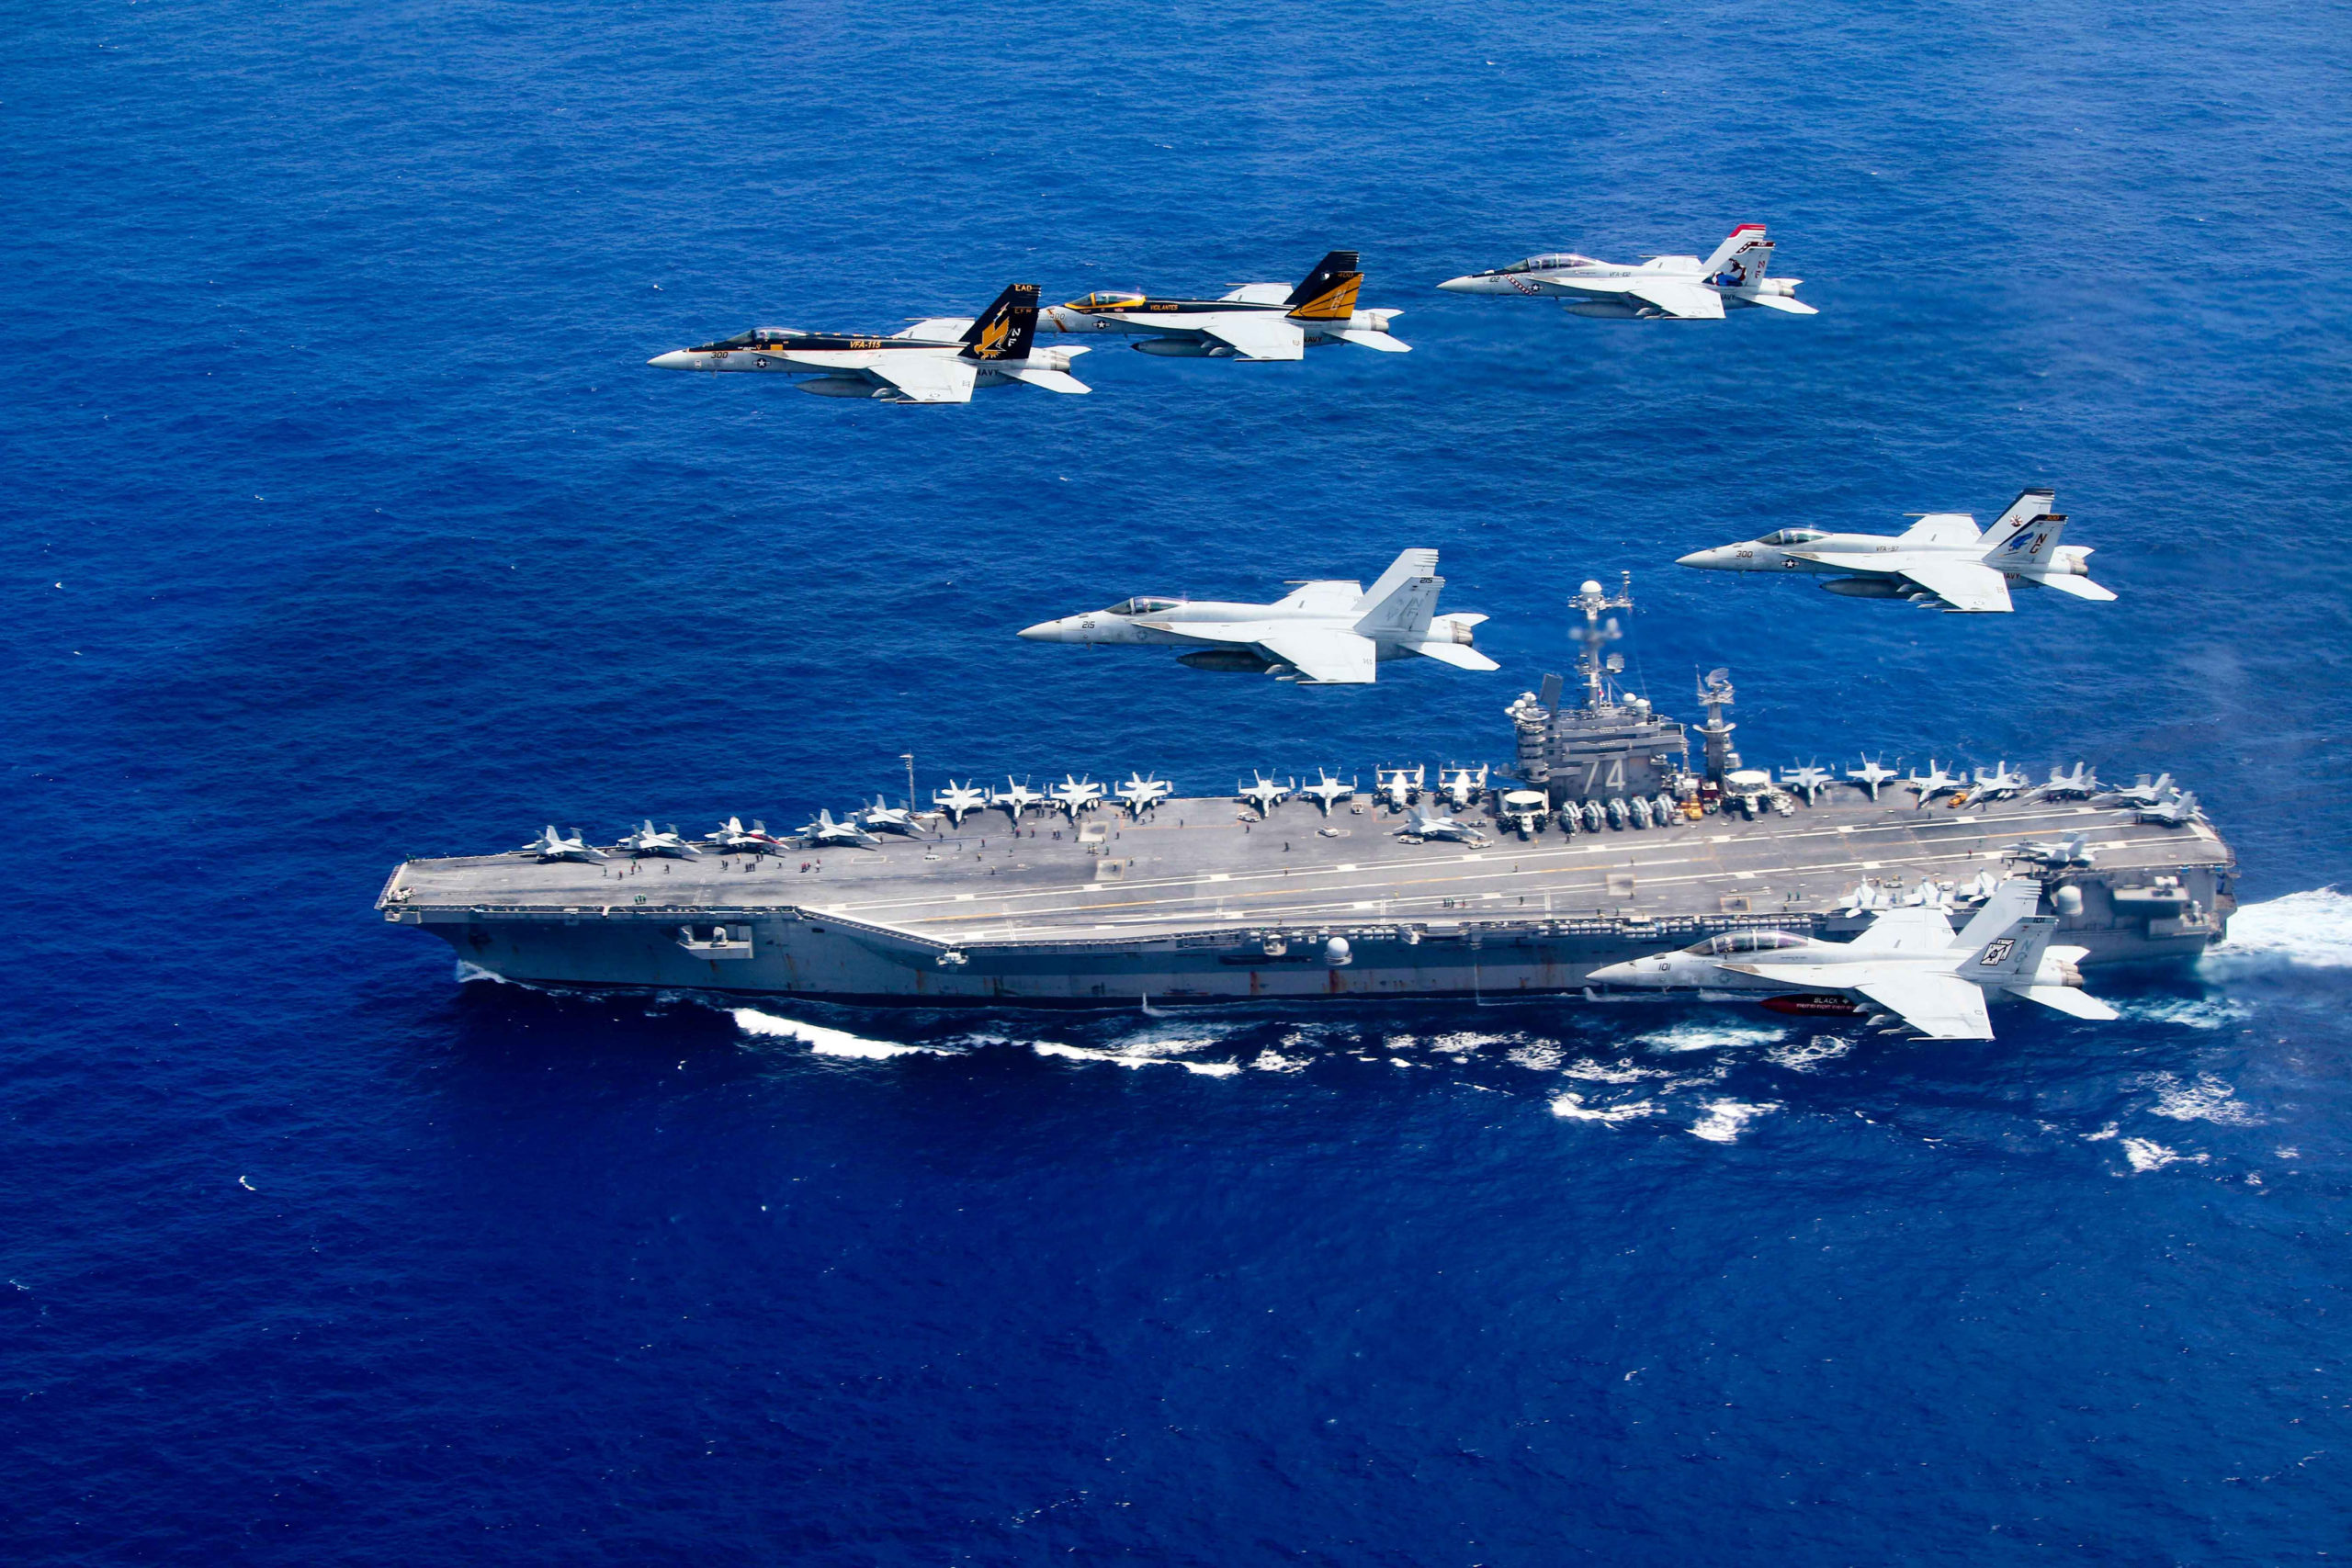 (Photo by Lt. Steve Smith/U.S. Navy via Getty Images)